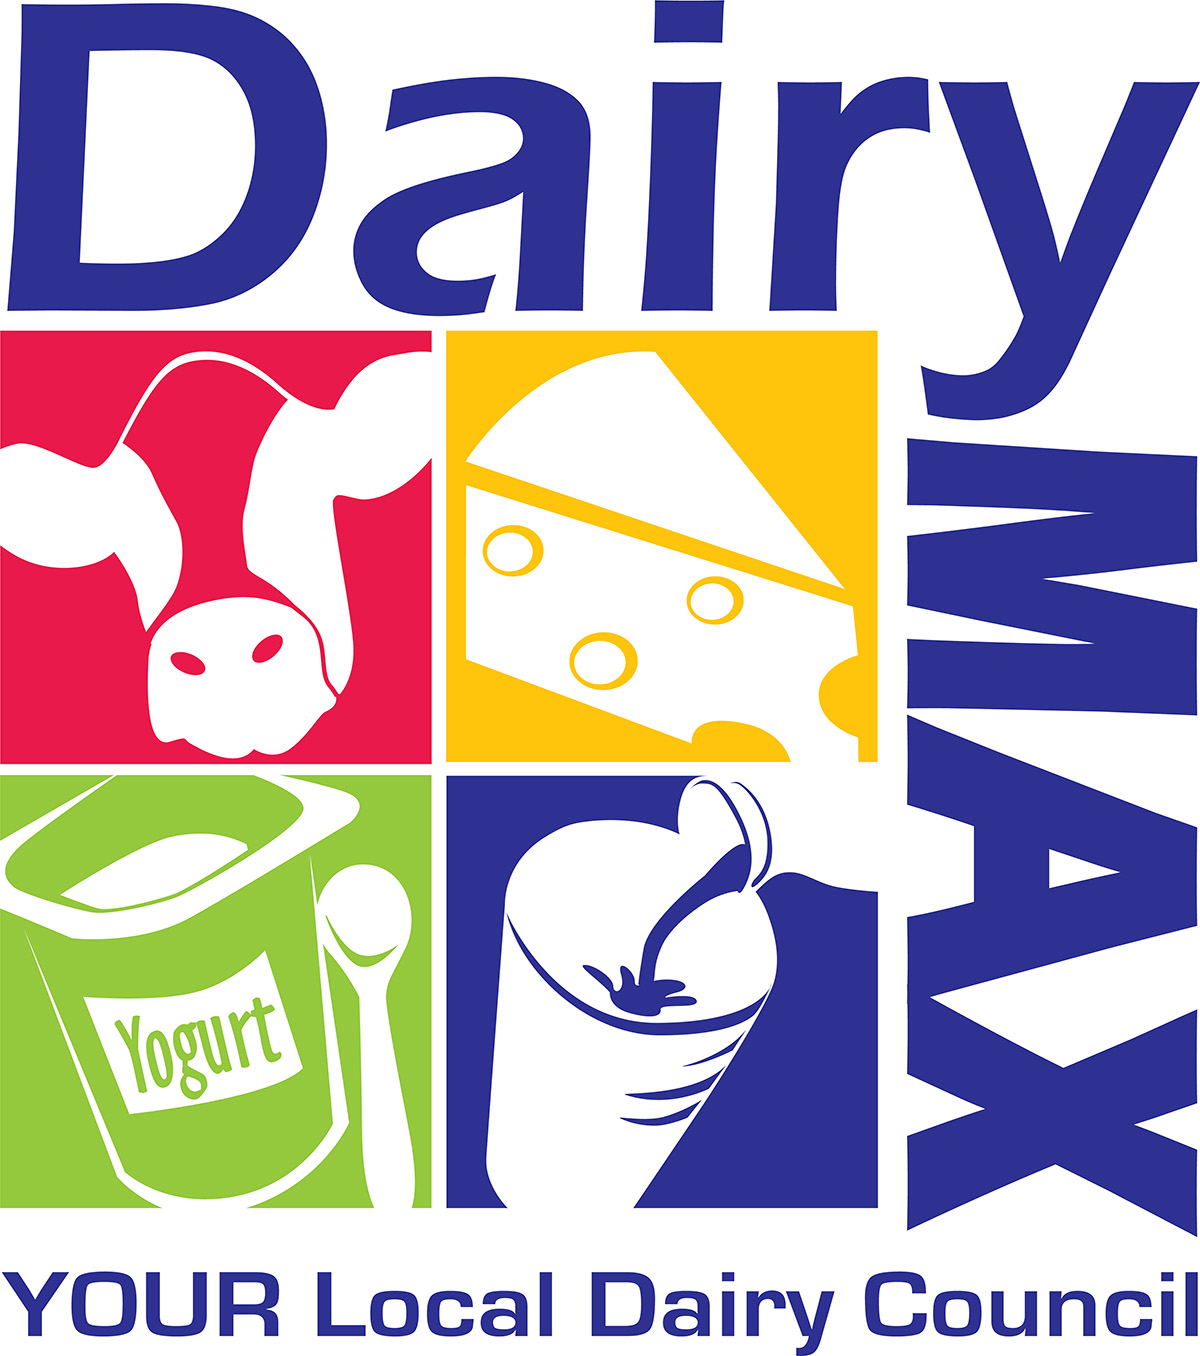 Dairy MAX logo